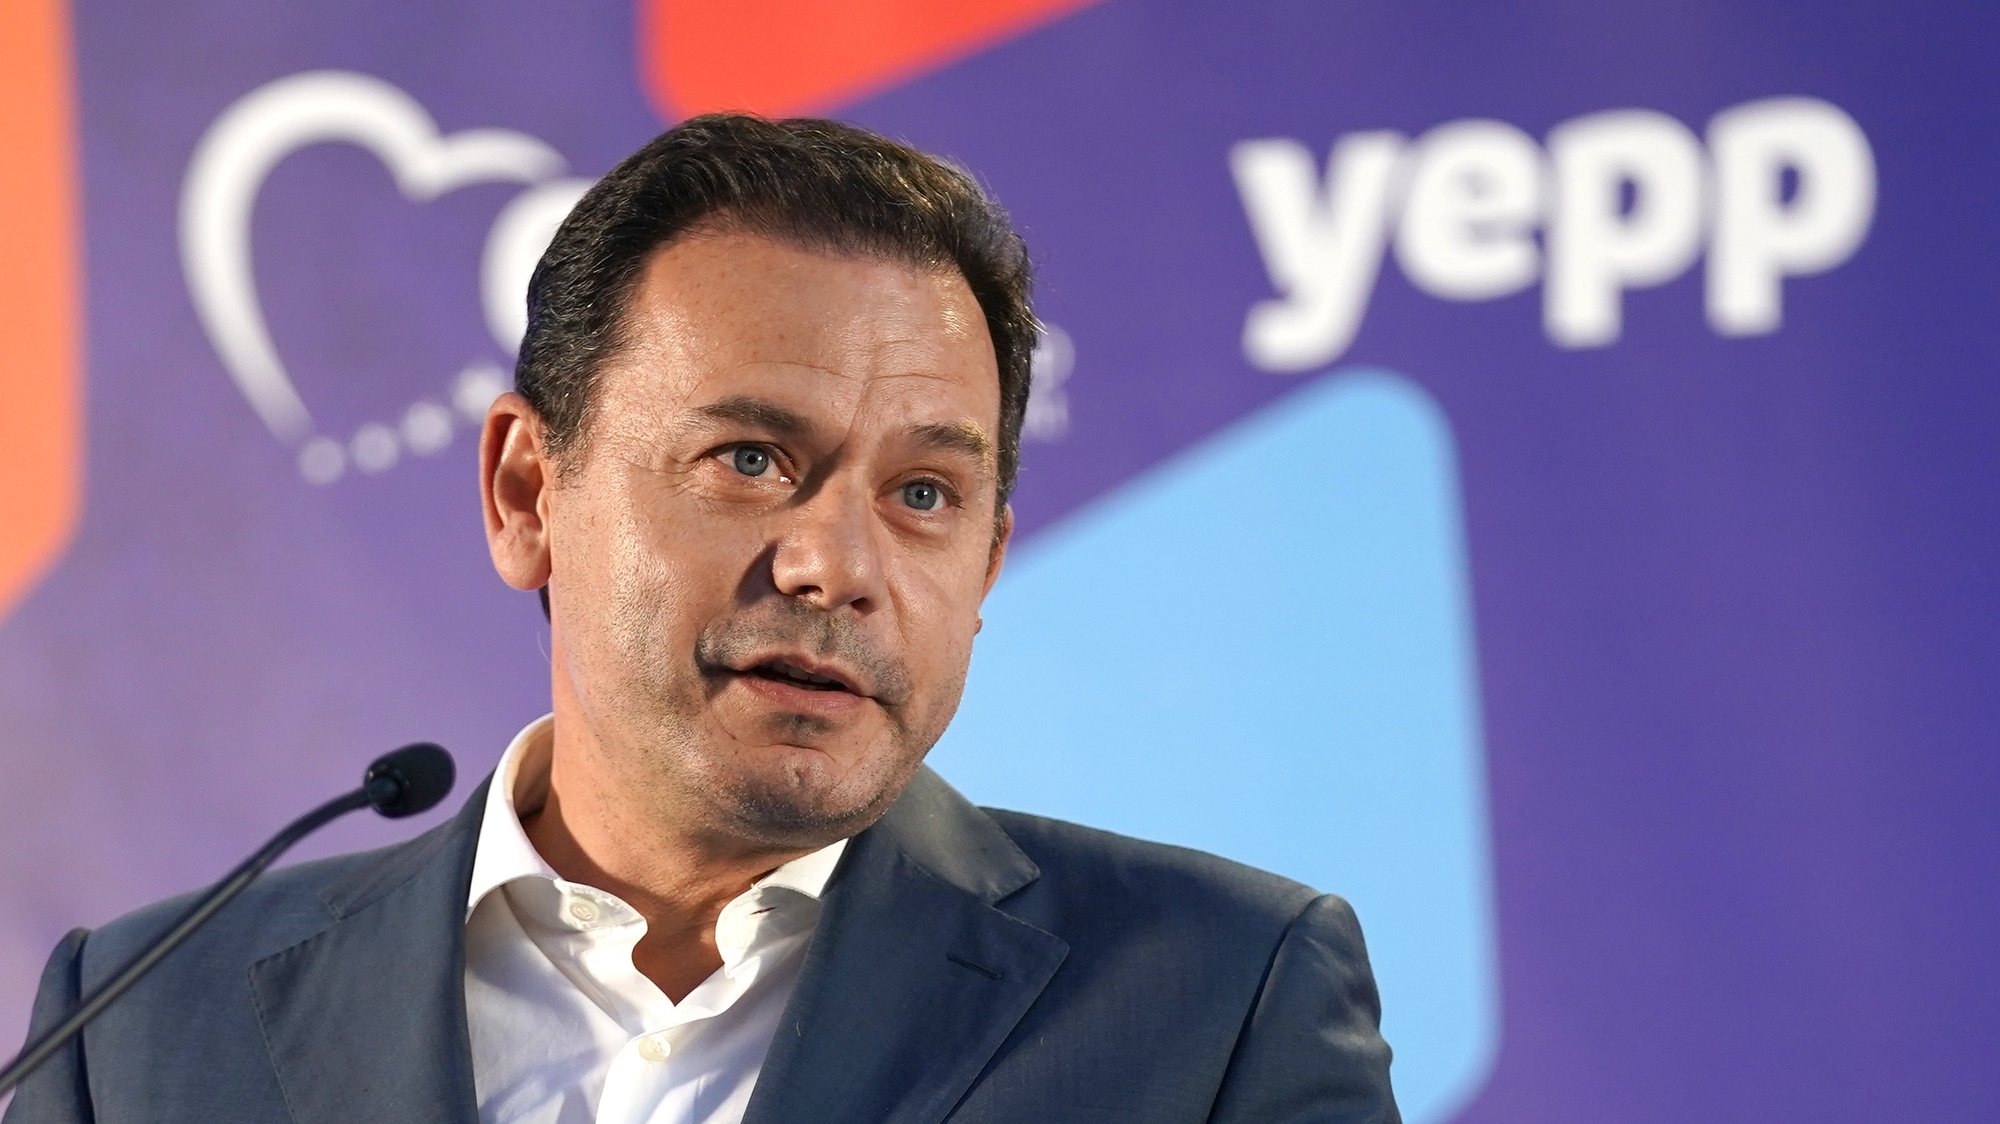 O presidente do Partido Social Democrata (PSD), Luís Montenegro, intervém durante o Congresso do YEPP (Juventude do Partido Popular Europeu), em Braga, 16 de junho de 2023. HUGO DELGADO/LUSA